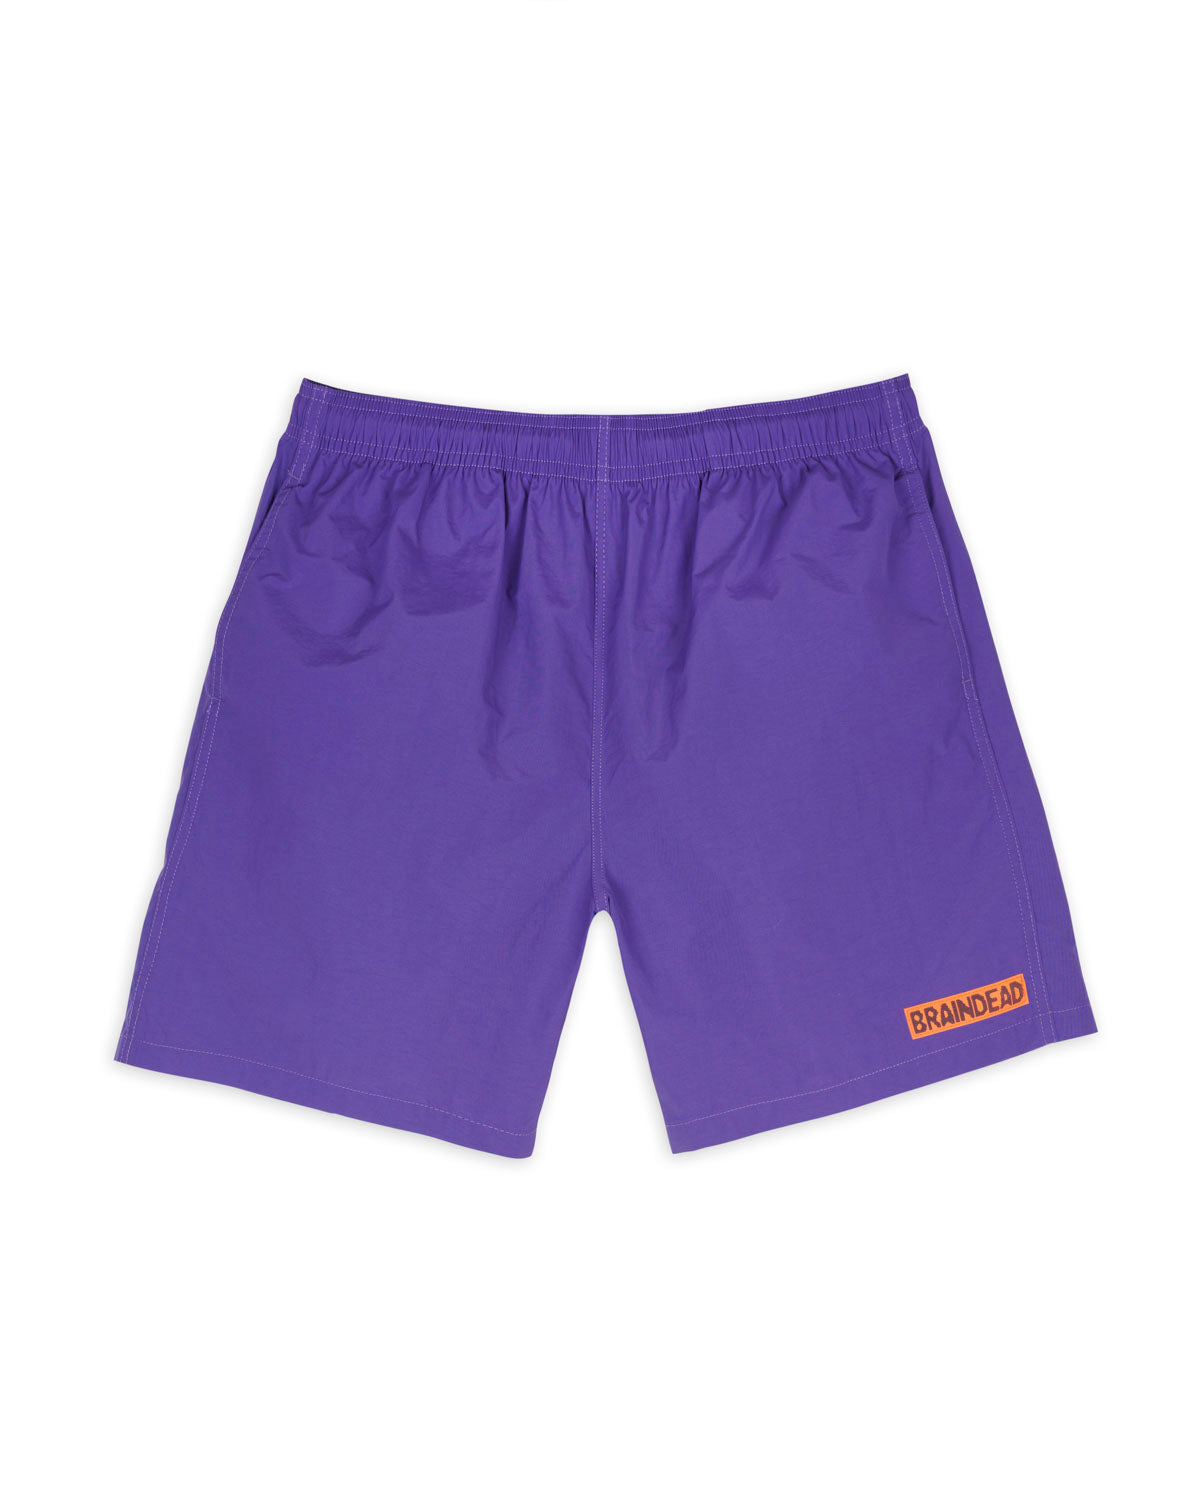 Kickers Short - Purple 1